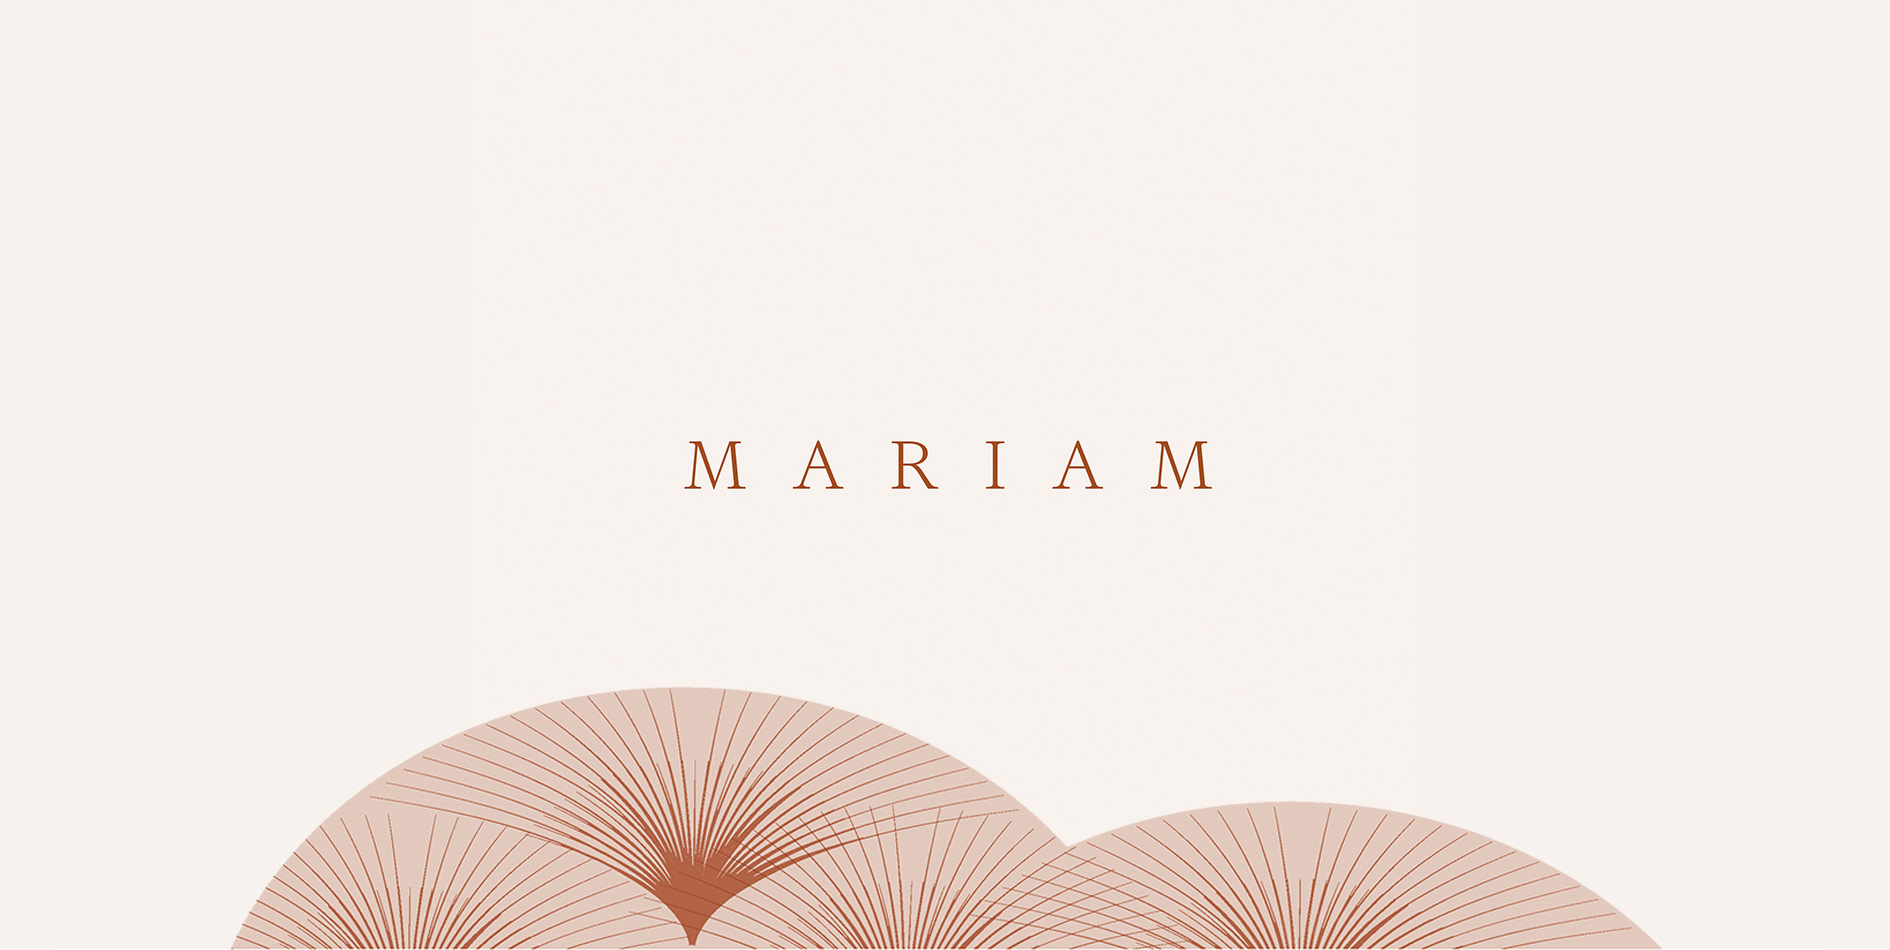 11Frashion Brand Mariam Logo and Wordmark - Vancouver Design Agency